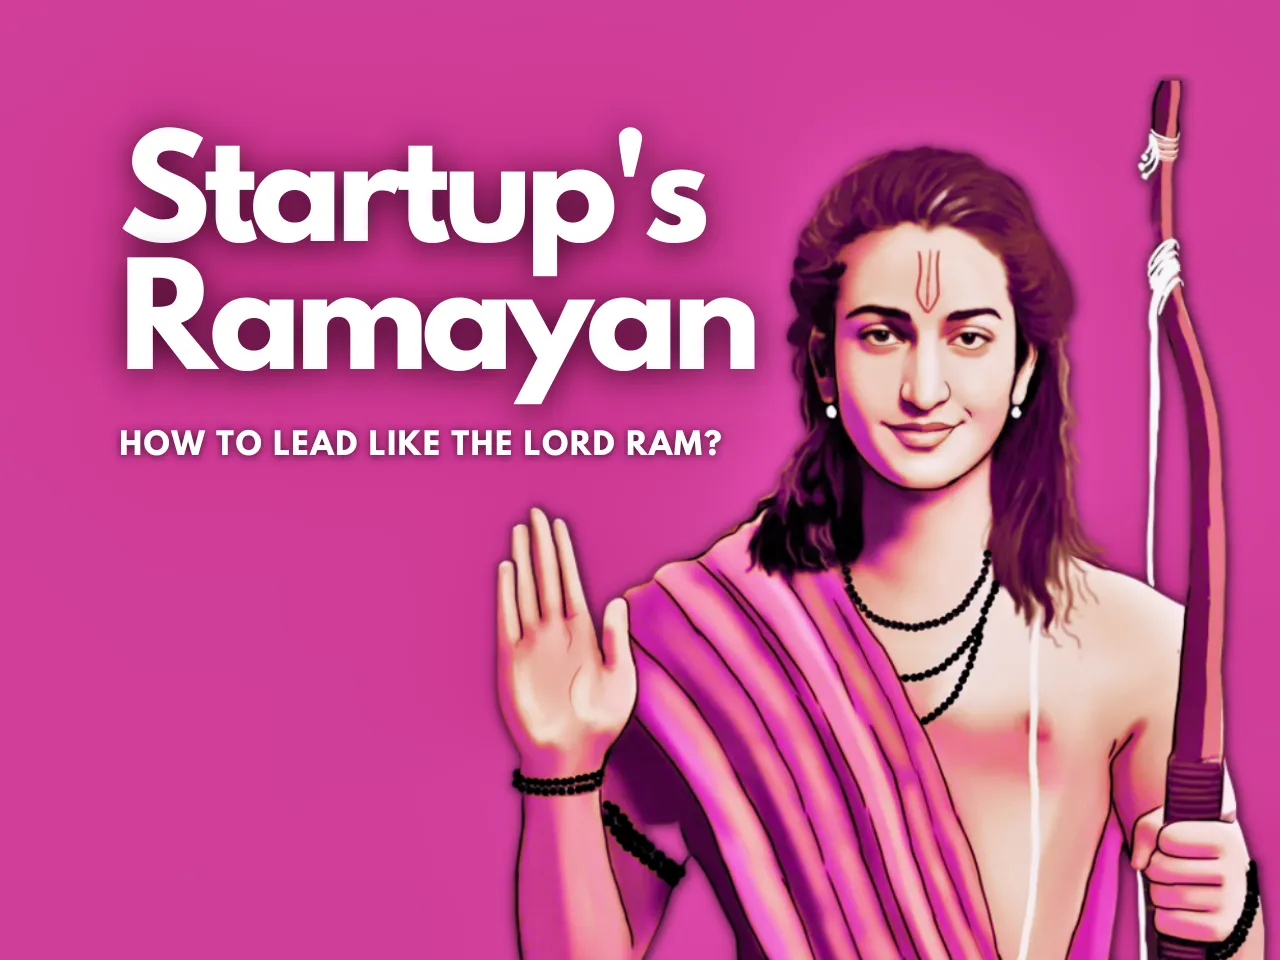 Startuop's Ramayana